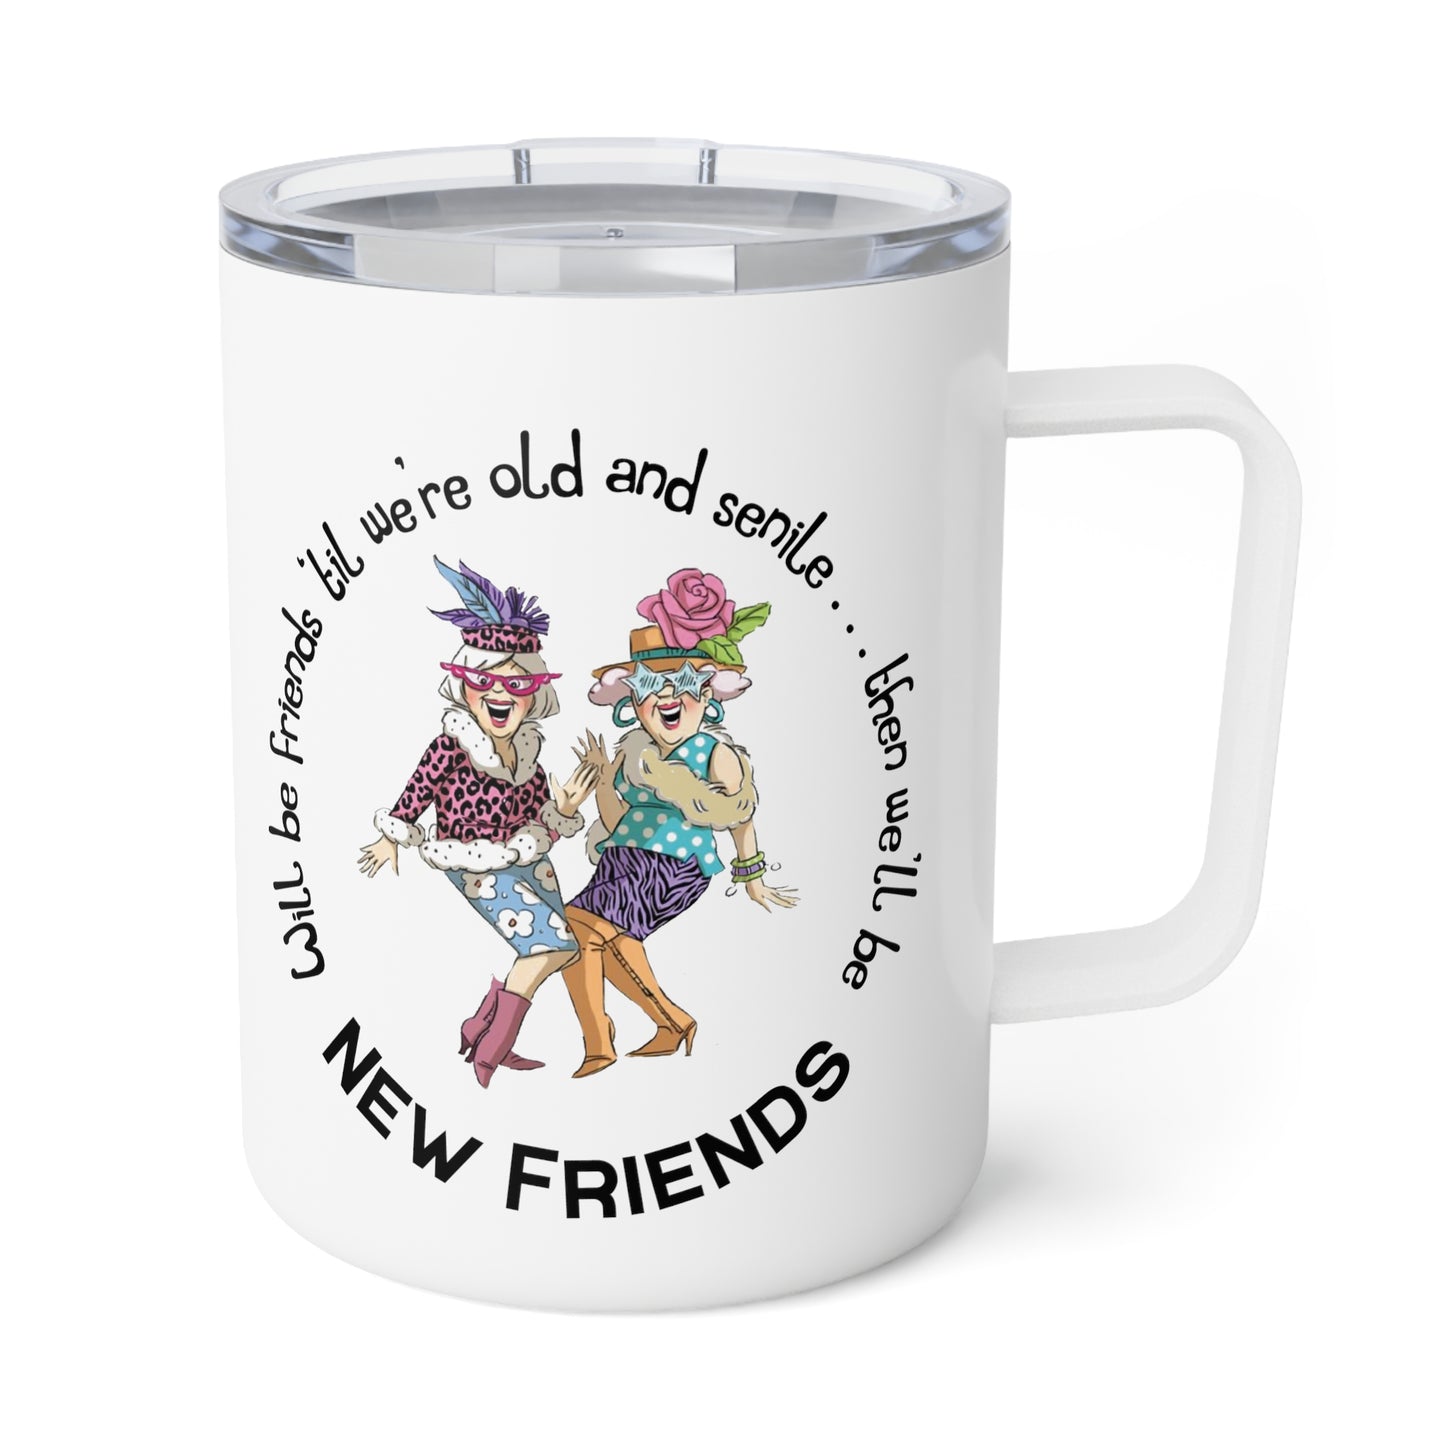 Best Friends Senile Club 10 oz. Stainless Steel Mug with Lid